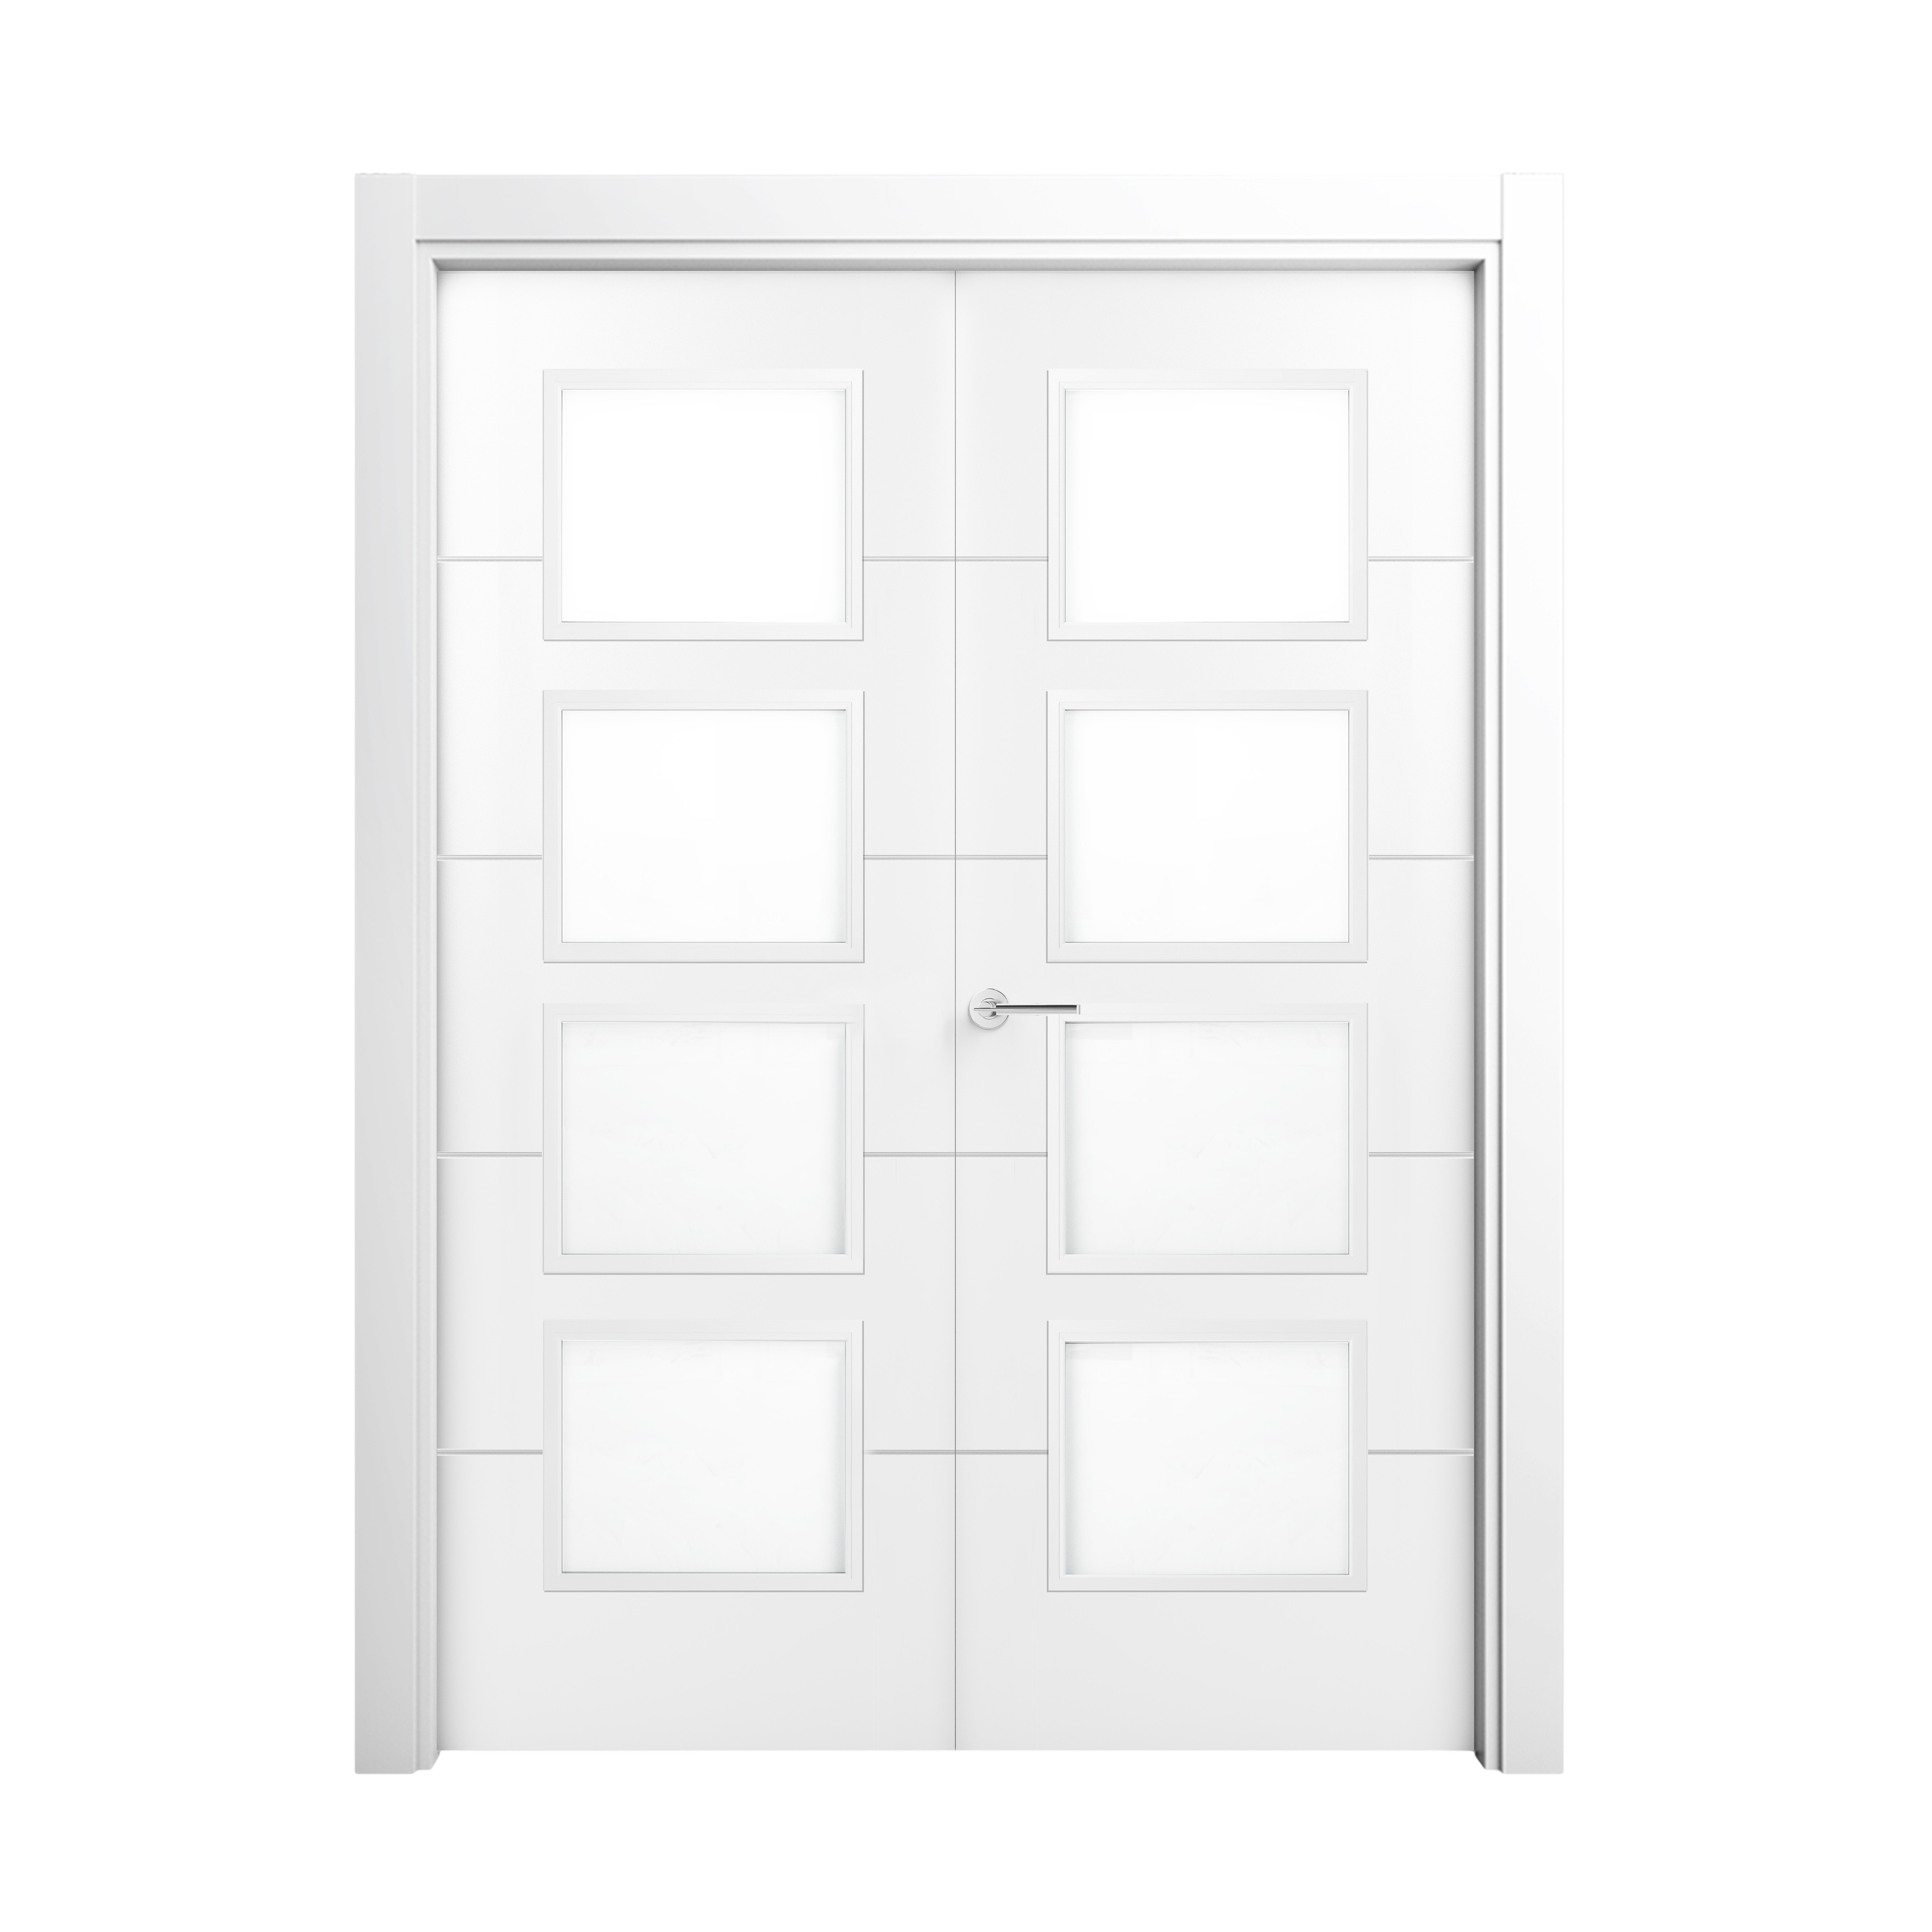 Puerta abatible lucerna blanca premium apertura derecha de 9x145 cm